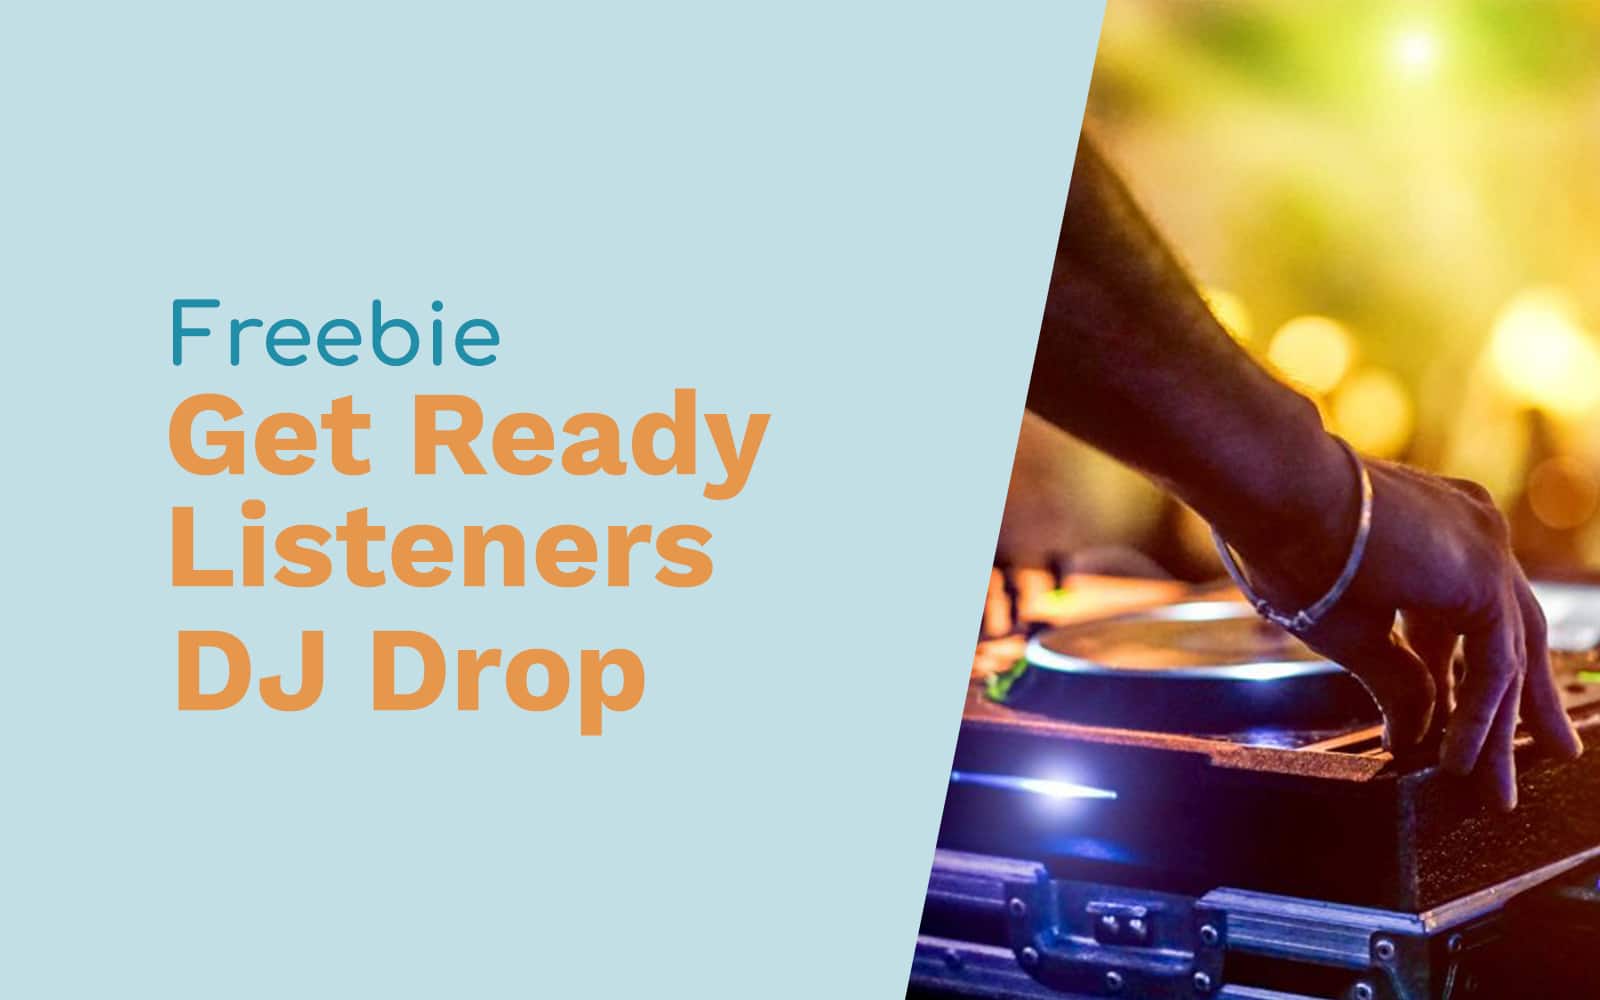 Free DJ Drops to Get Your Listeners Ready DJ Drops free DJ drops Music Radio Creative